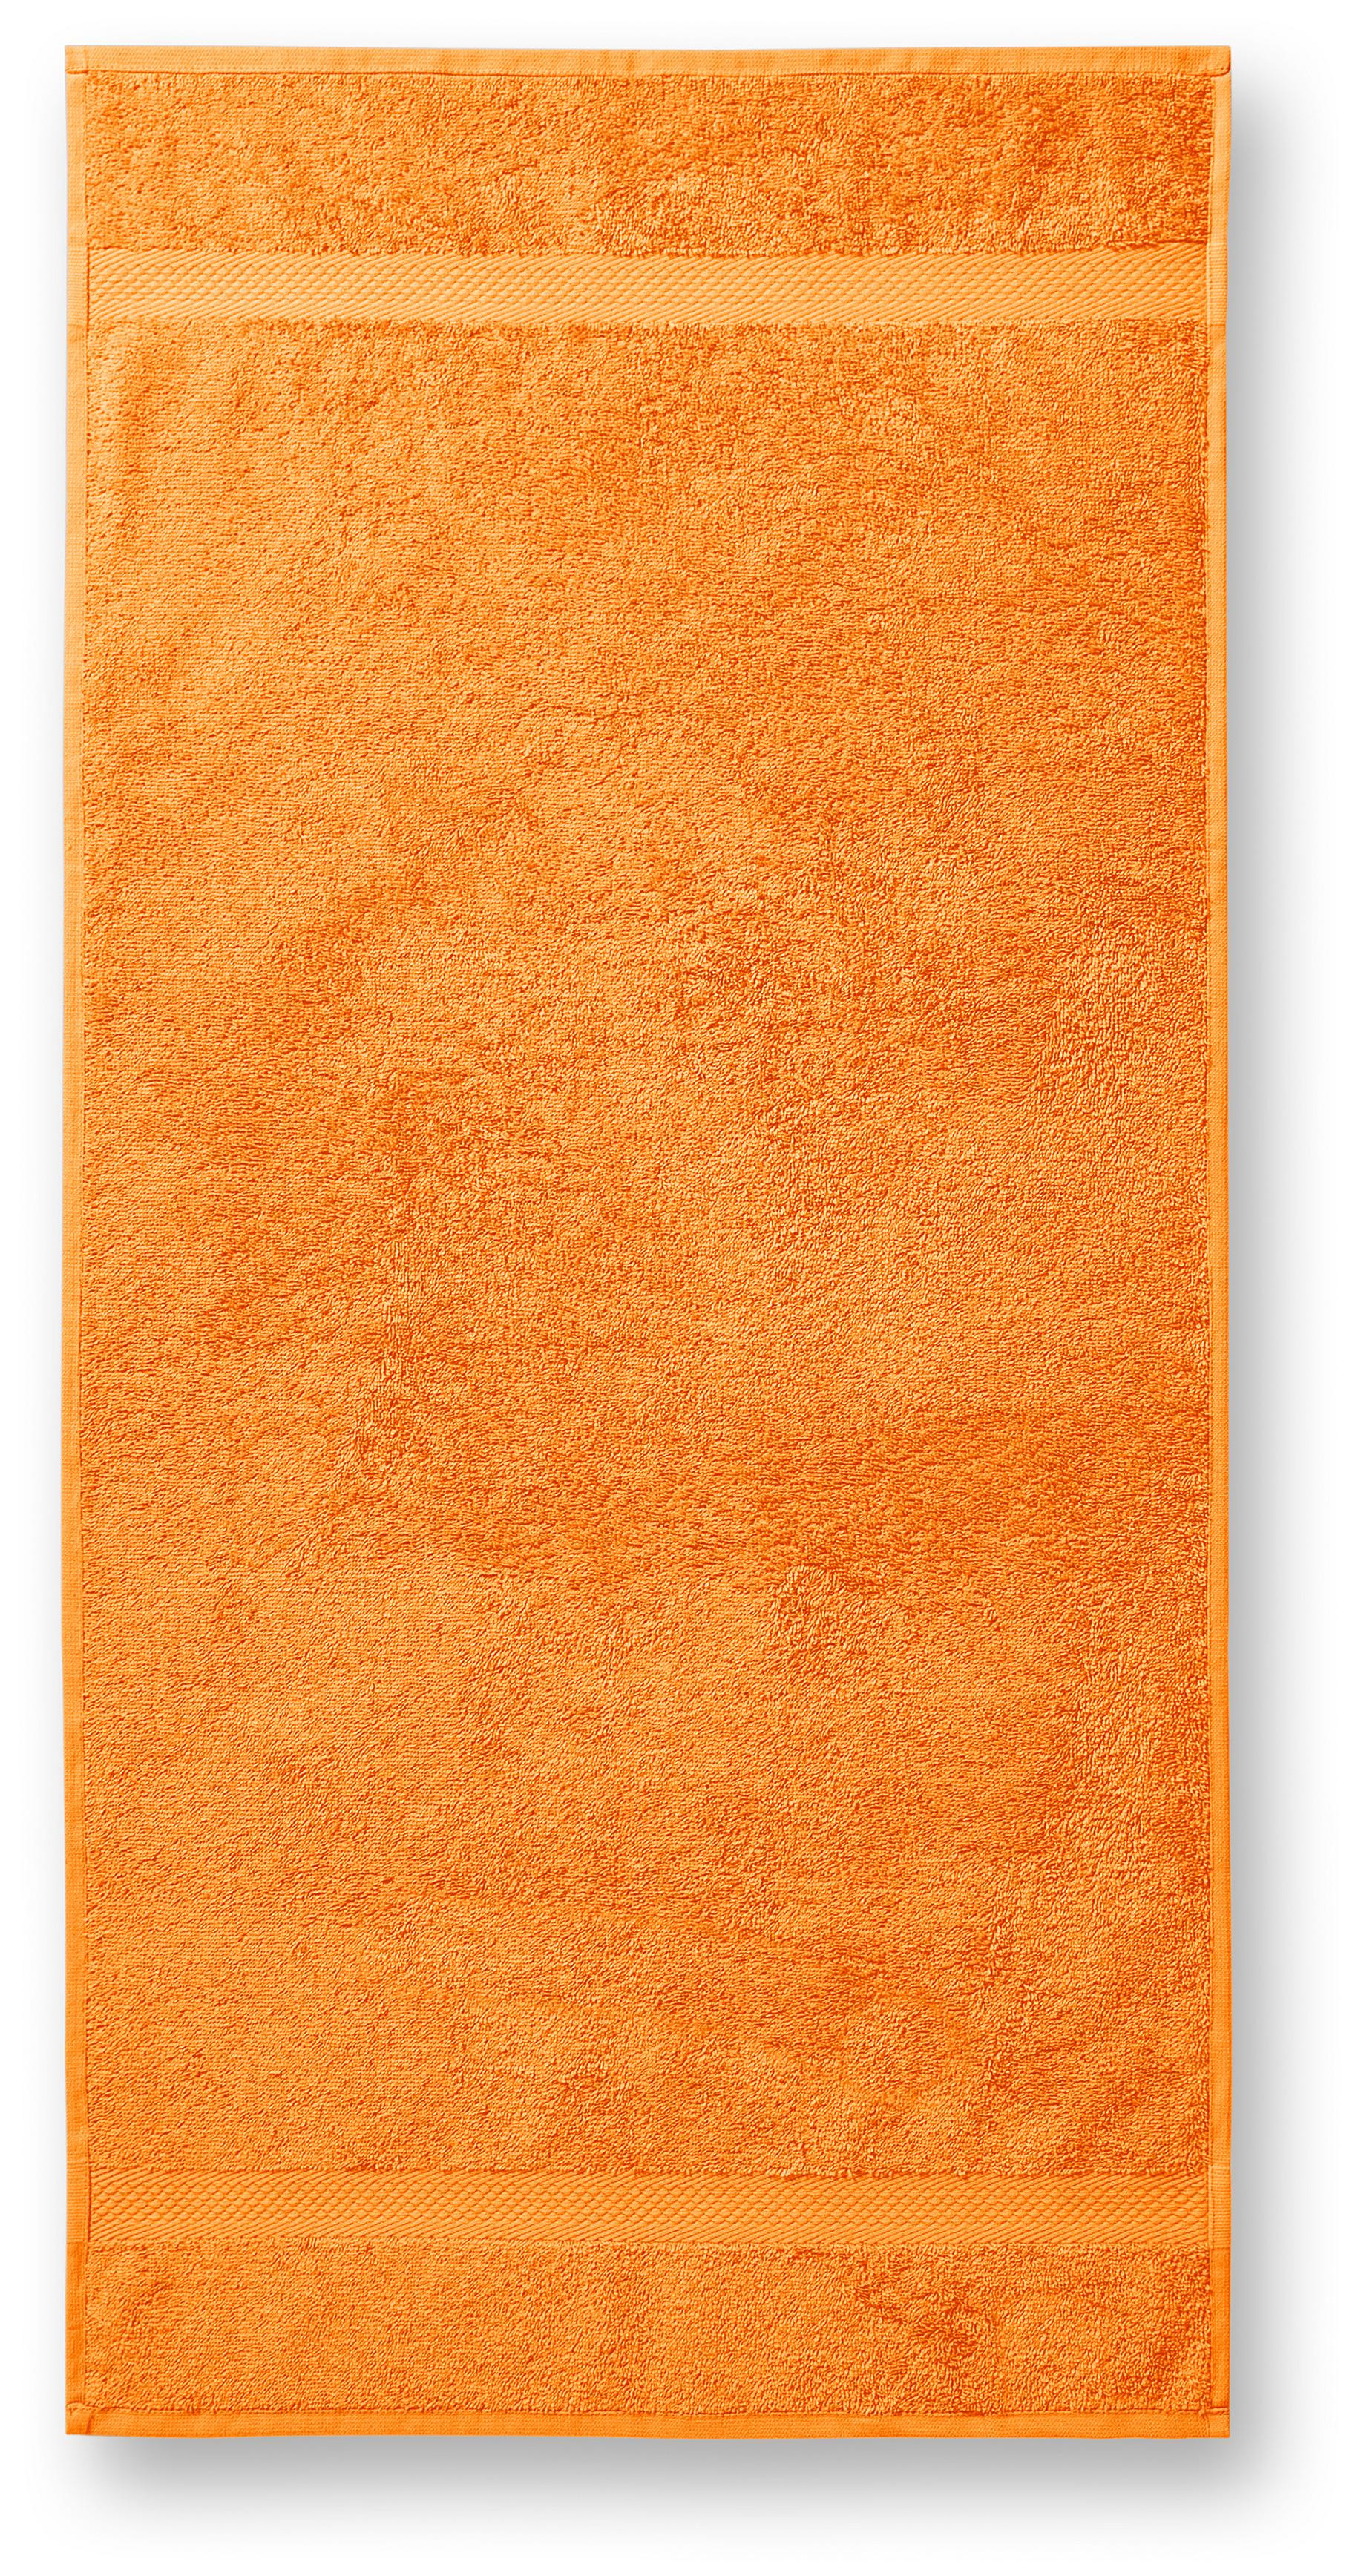 Bavlnený uterák hrubší, mandarínková oranžová, 50x100cm